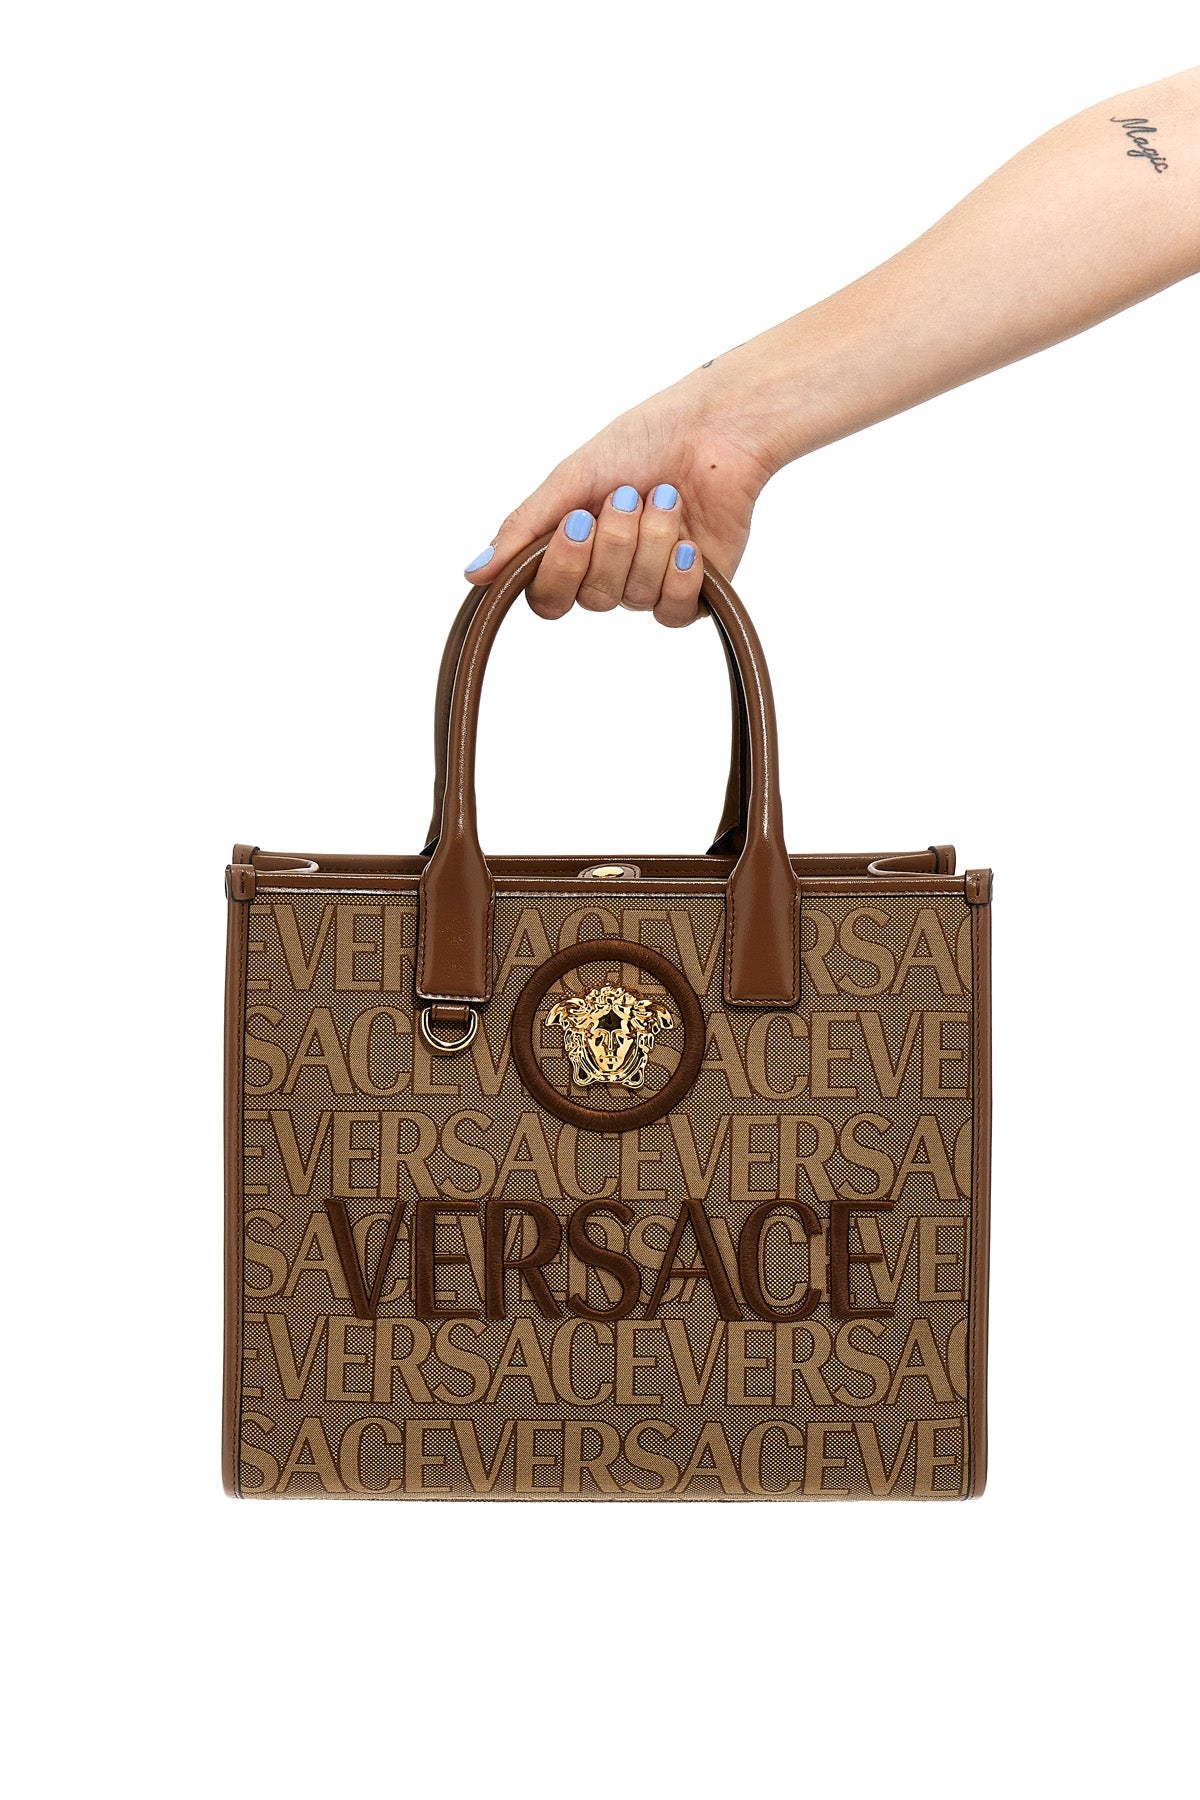 VERSACE LA VACANZA 'VERSACE ALLOVER' SMALL CAPSULE SHOPPING BAG 10058611A081992N24V